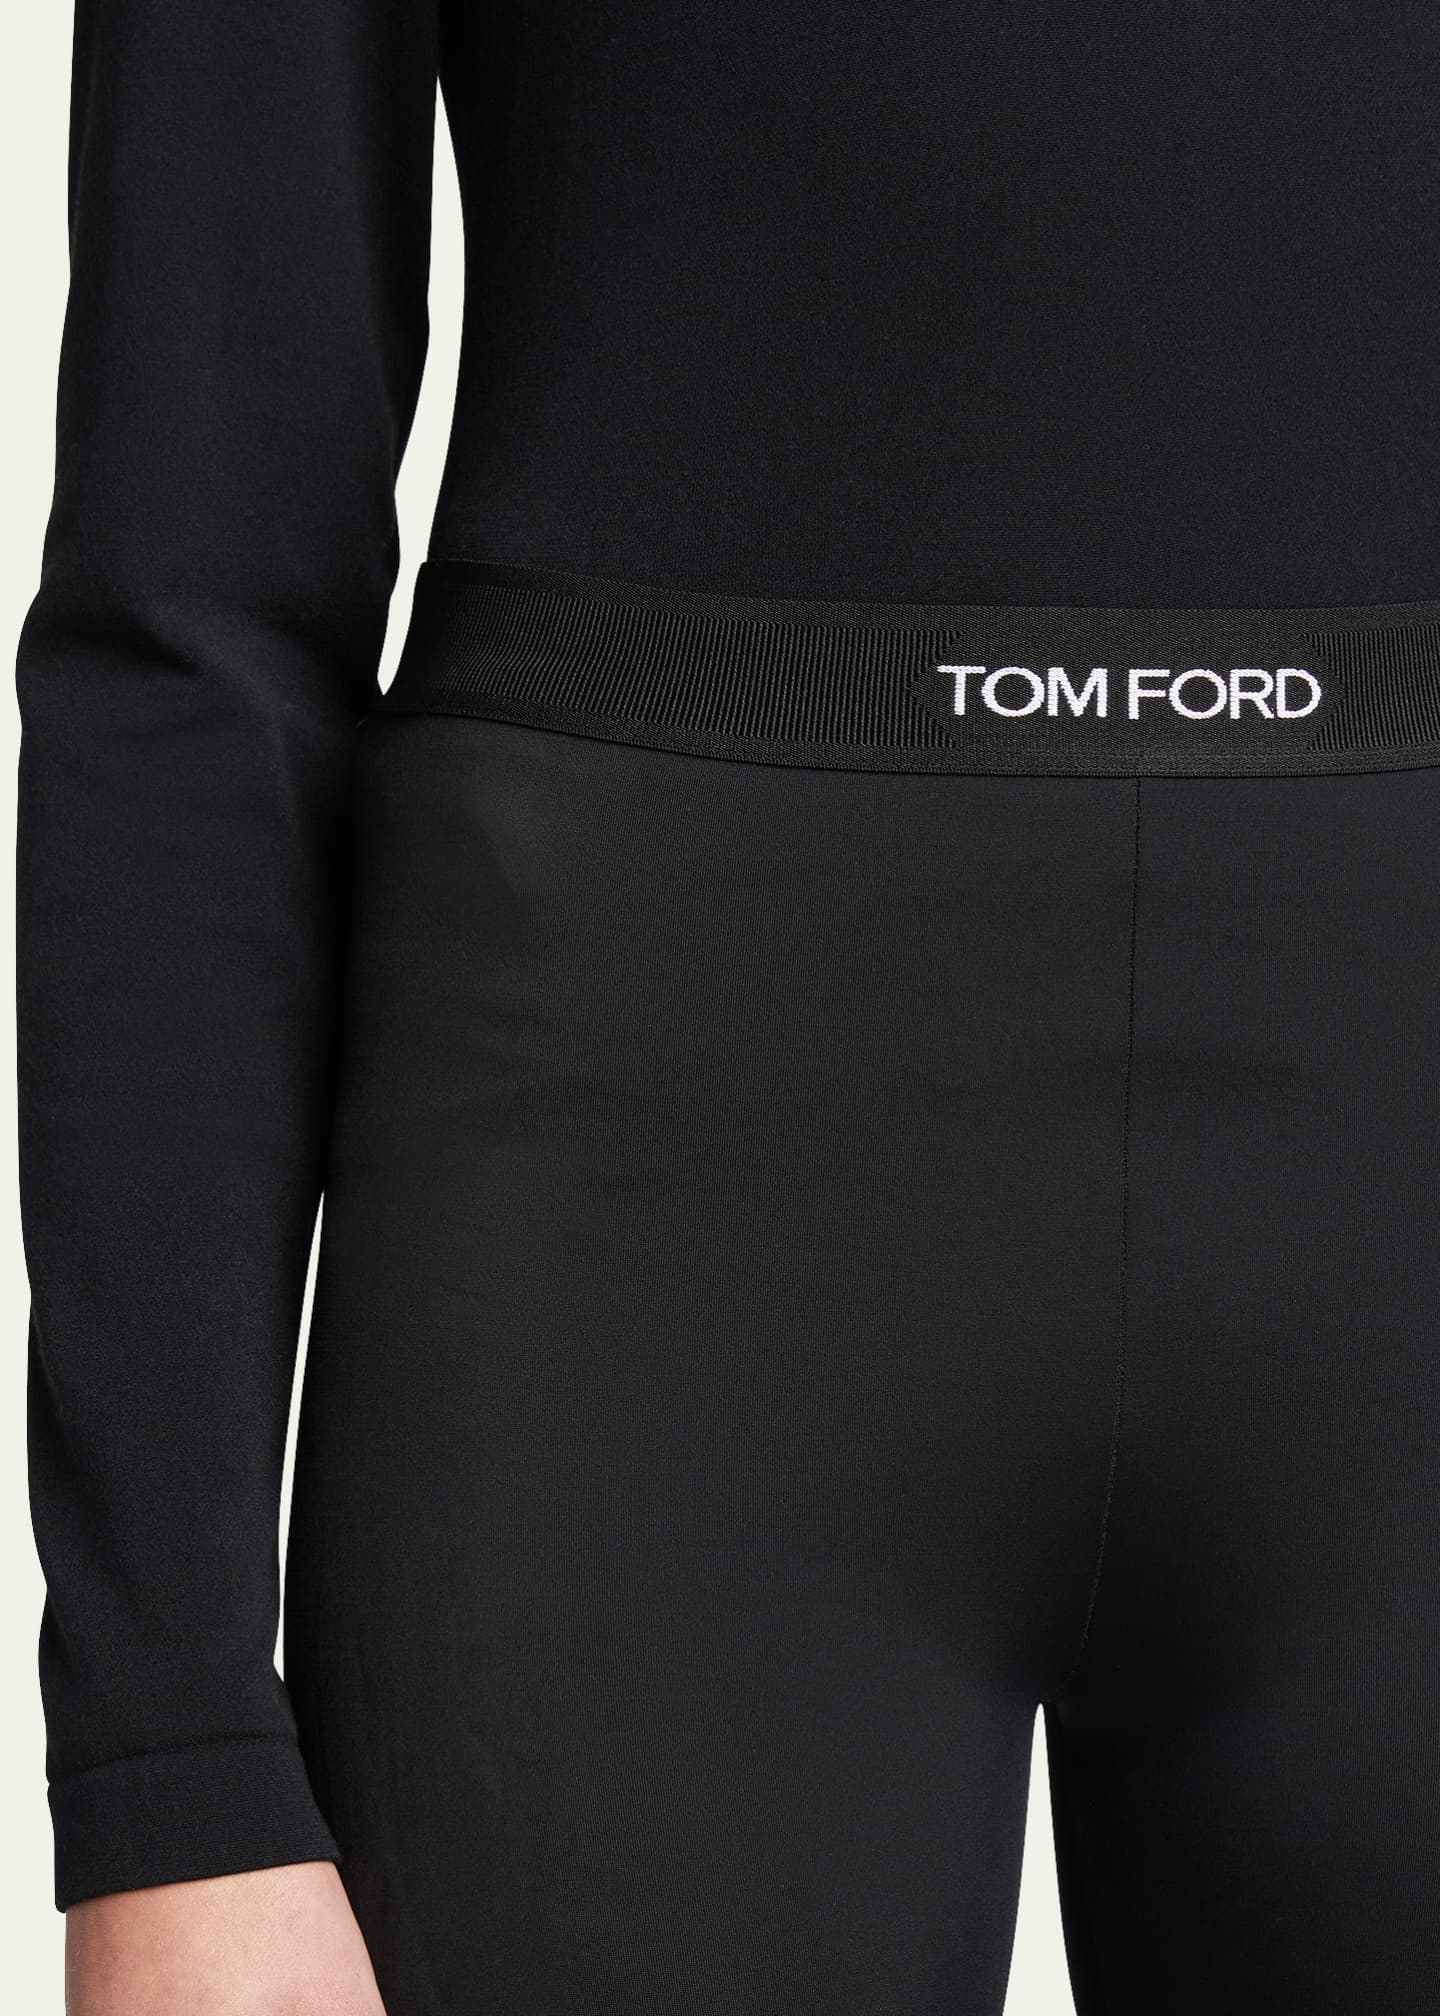 Tom Ford Leggings with logo, Women's Clothing